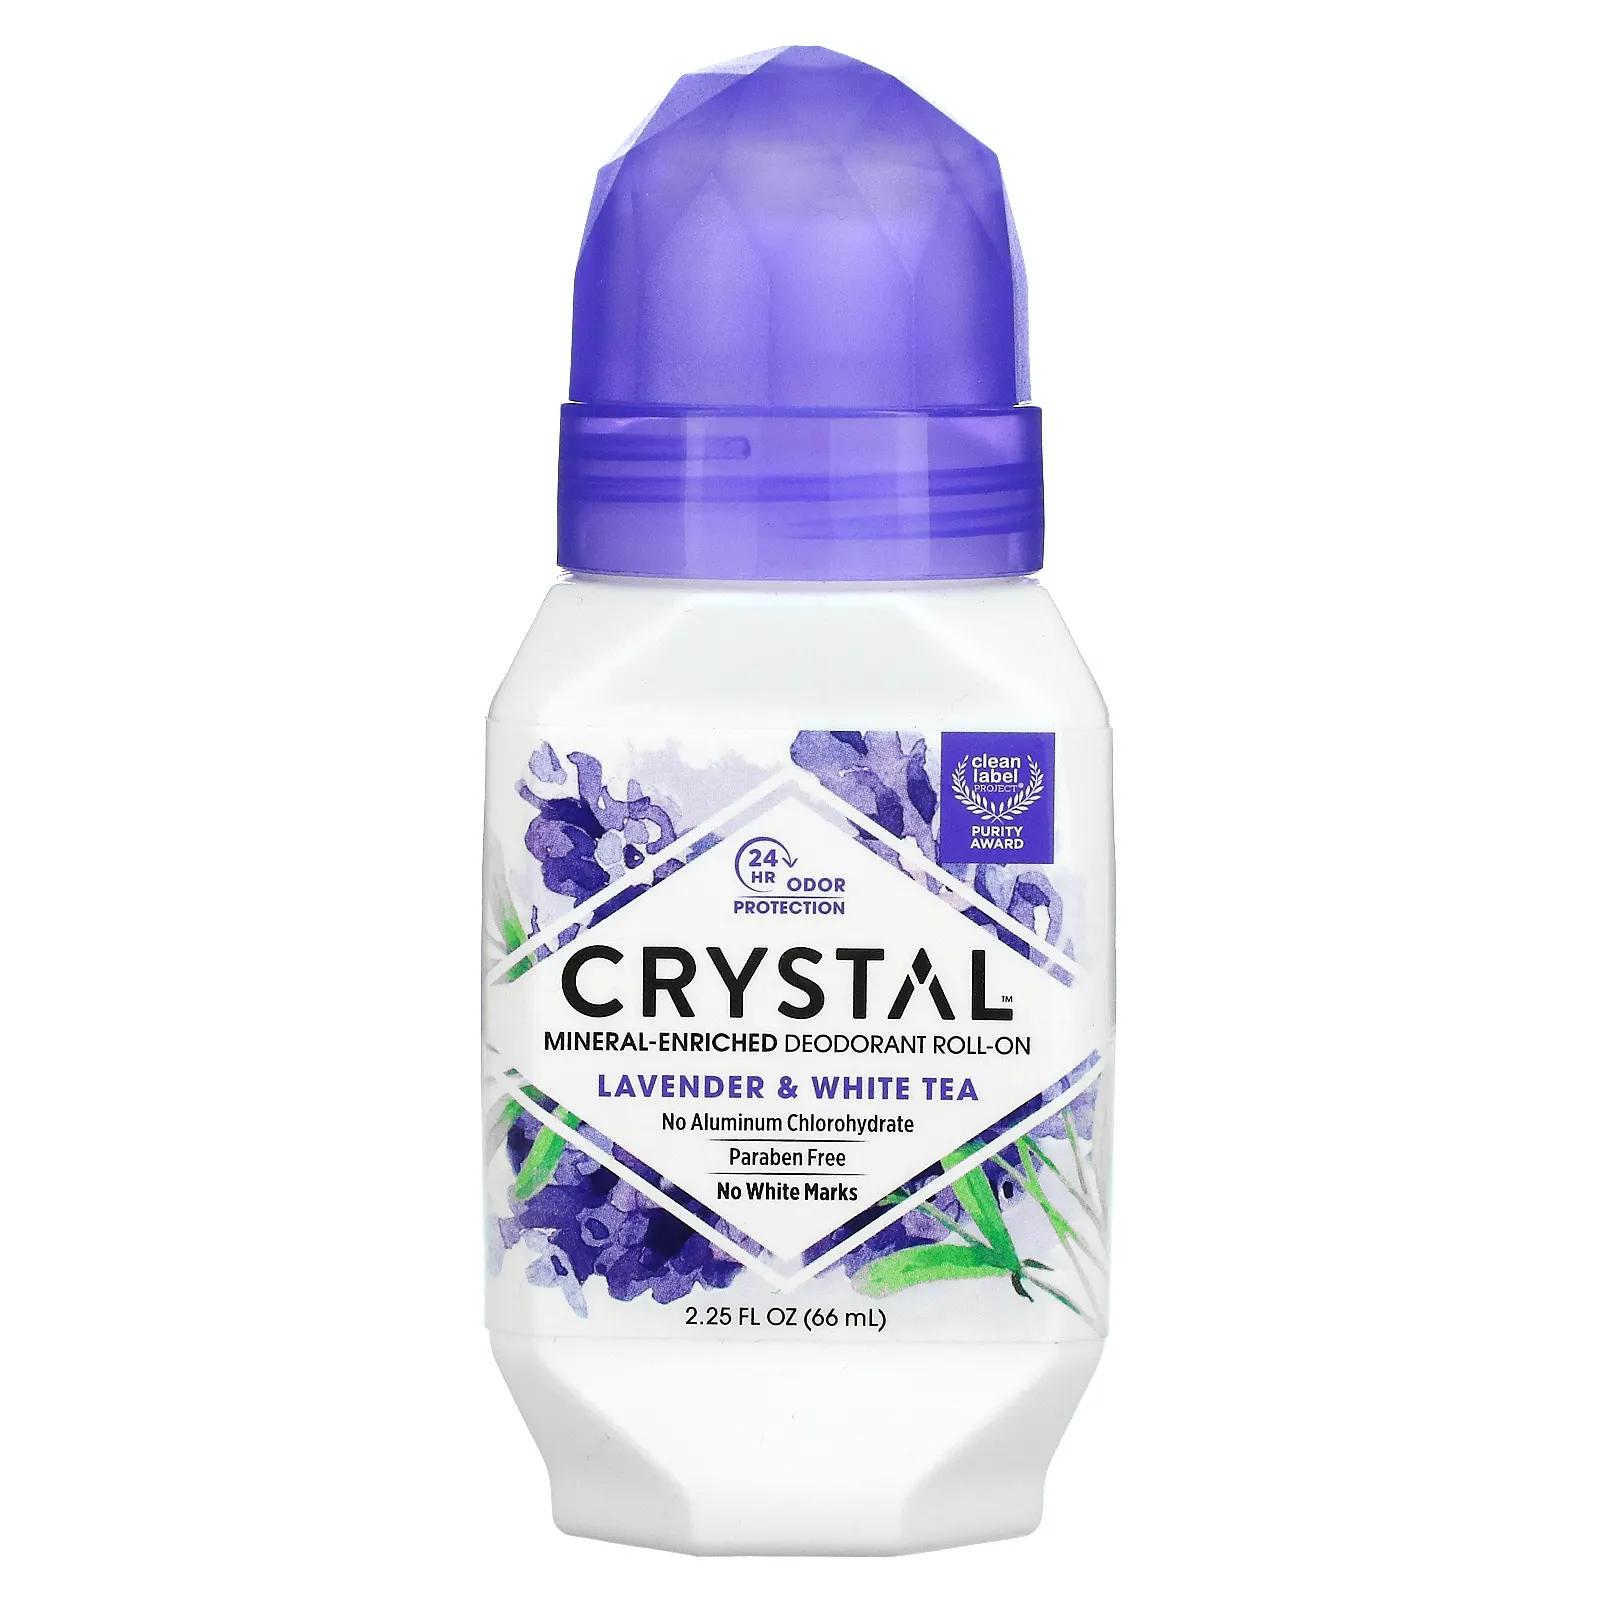 Crystal Body Deodorant Натуральный роликовый дезодорант лаванда и белый чай 2,25 ж. унц. (66 мл)